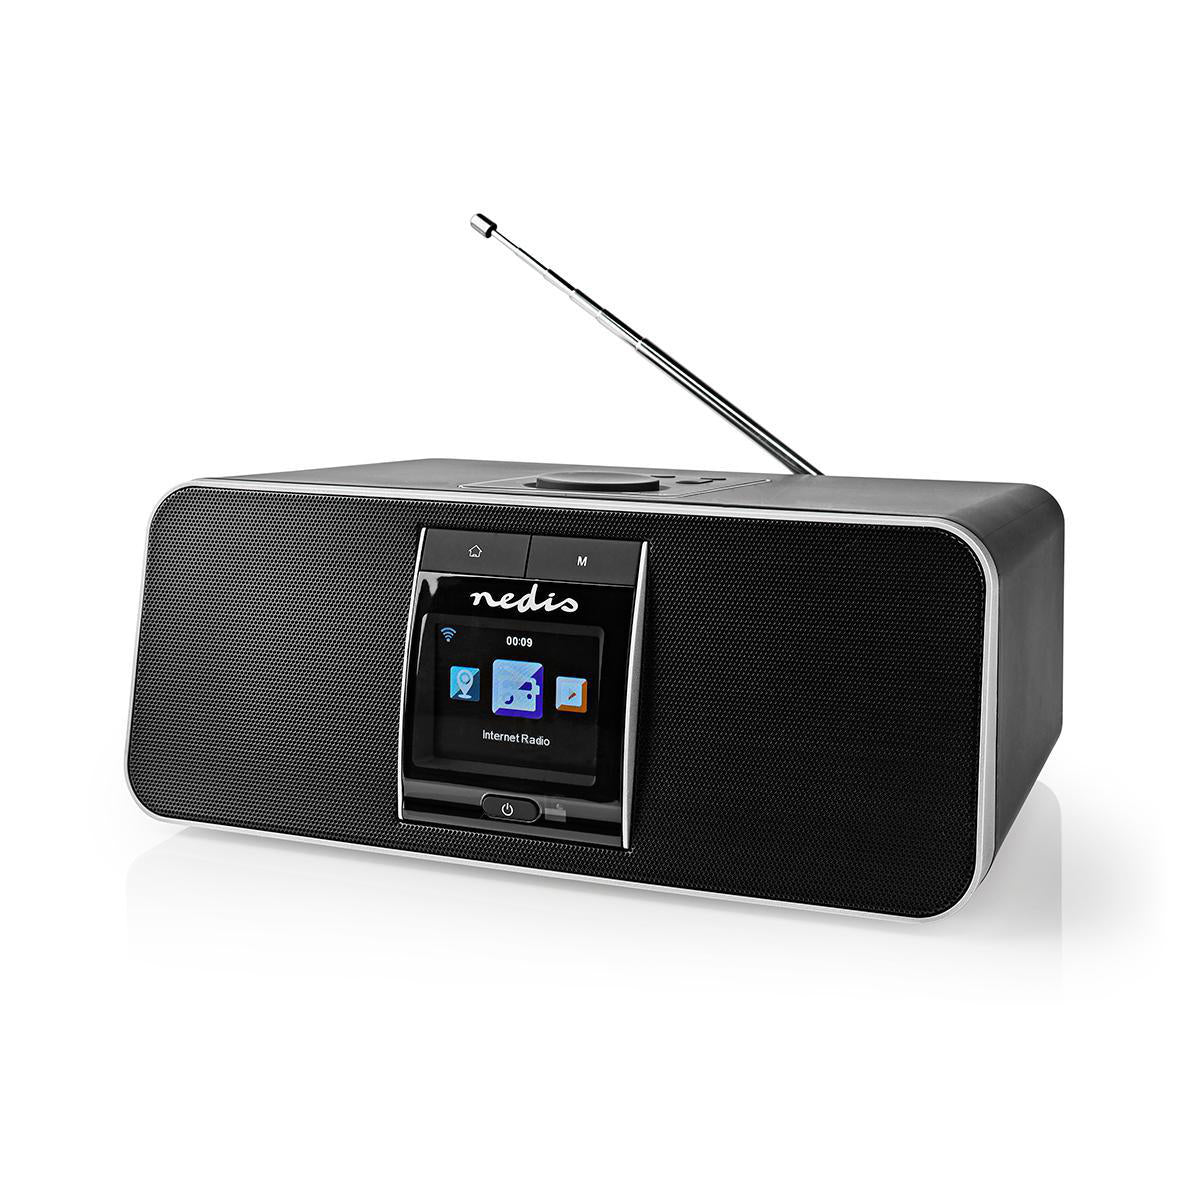 Internetradio Bluetooth Wi-Fi DAB+ FM 42W jetzt kaufen - Aktionskönig